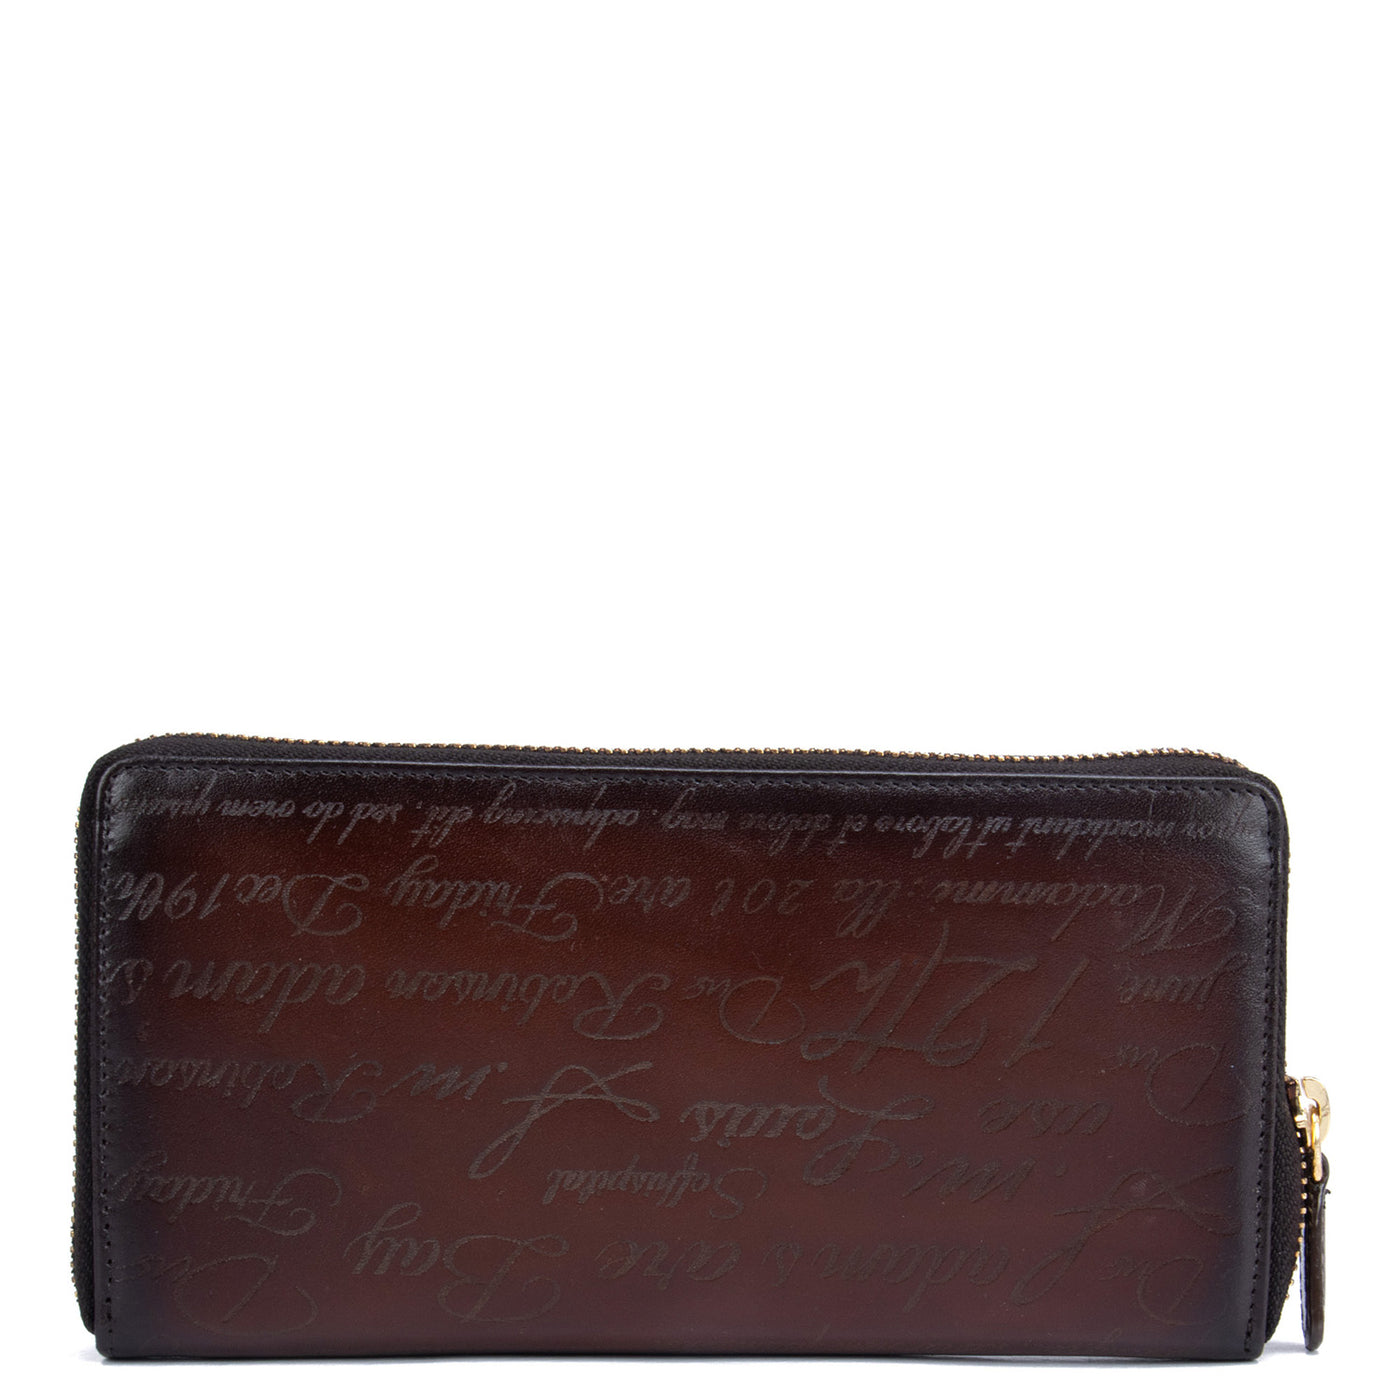 Da Milano Signato Leather Ladies Wallet - Cognac